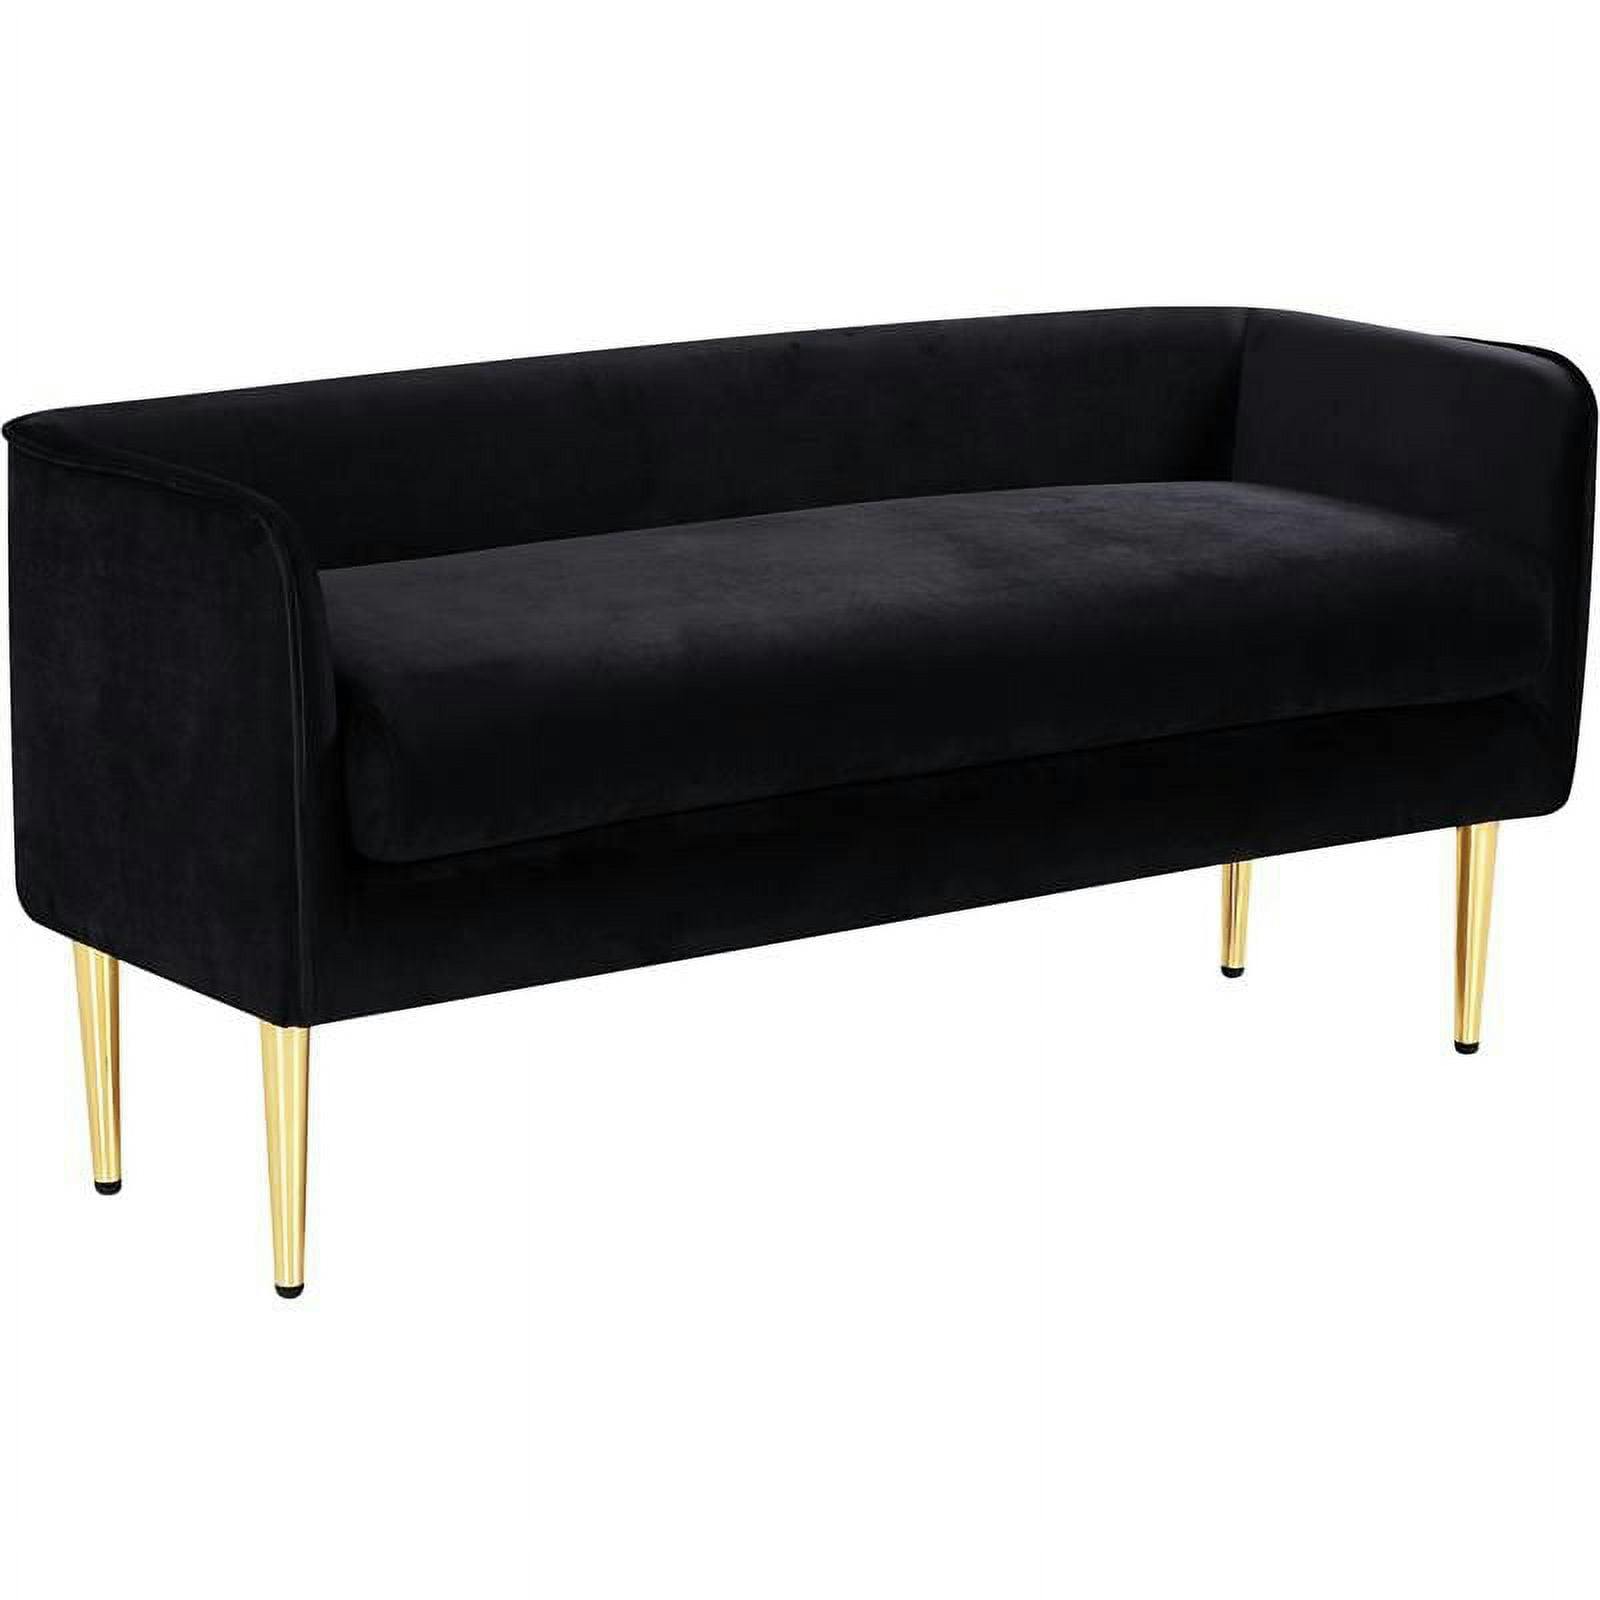 Audrey Contemporary Black Velvet Bench with Golden Legs